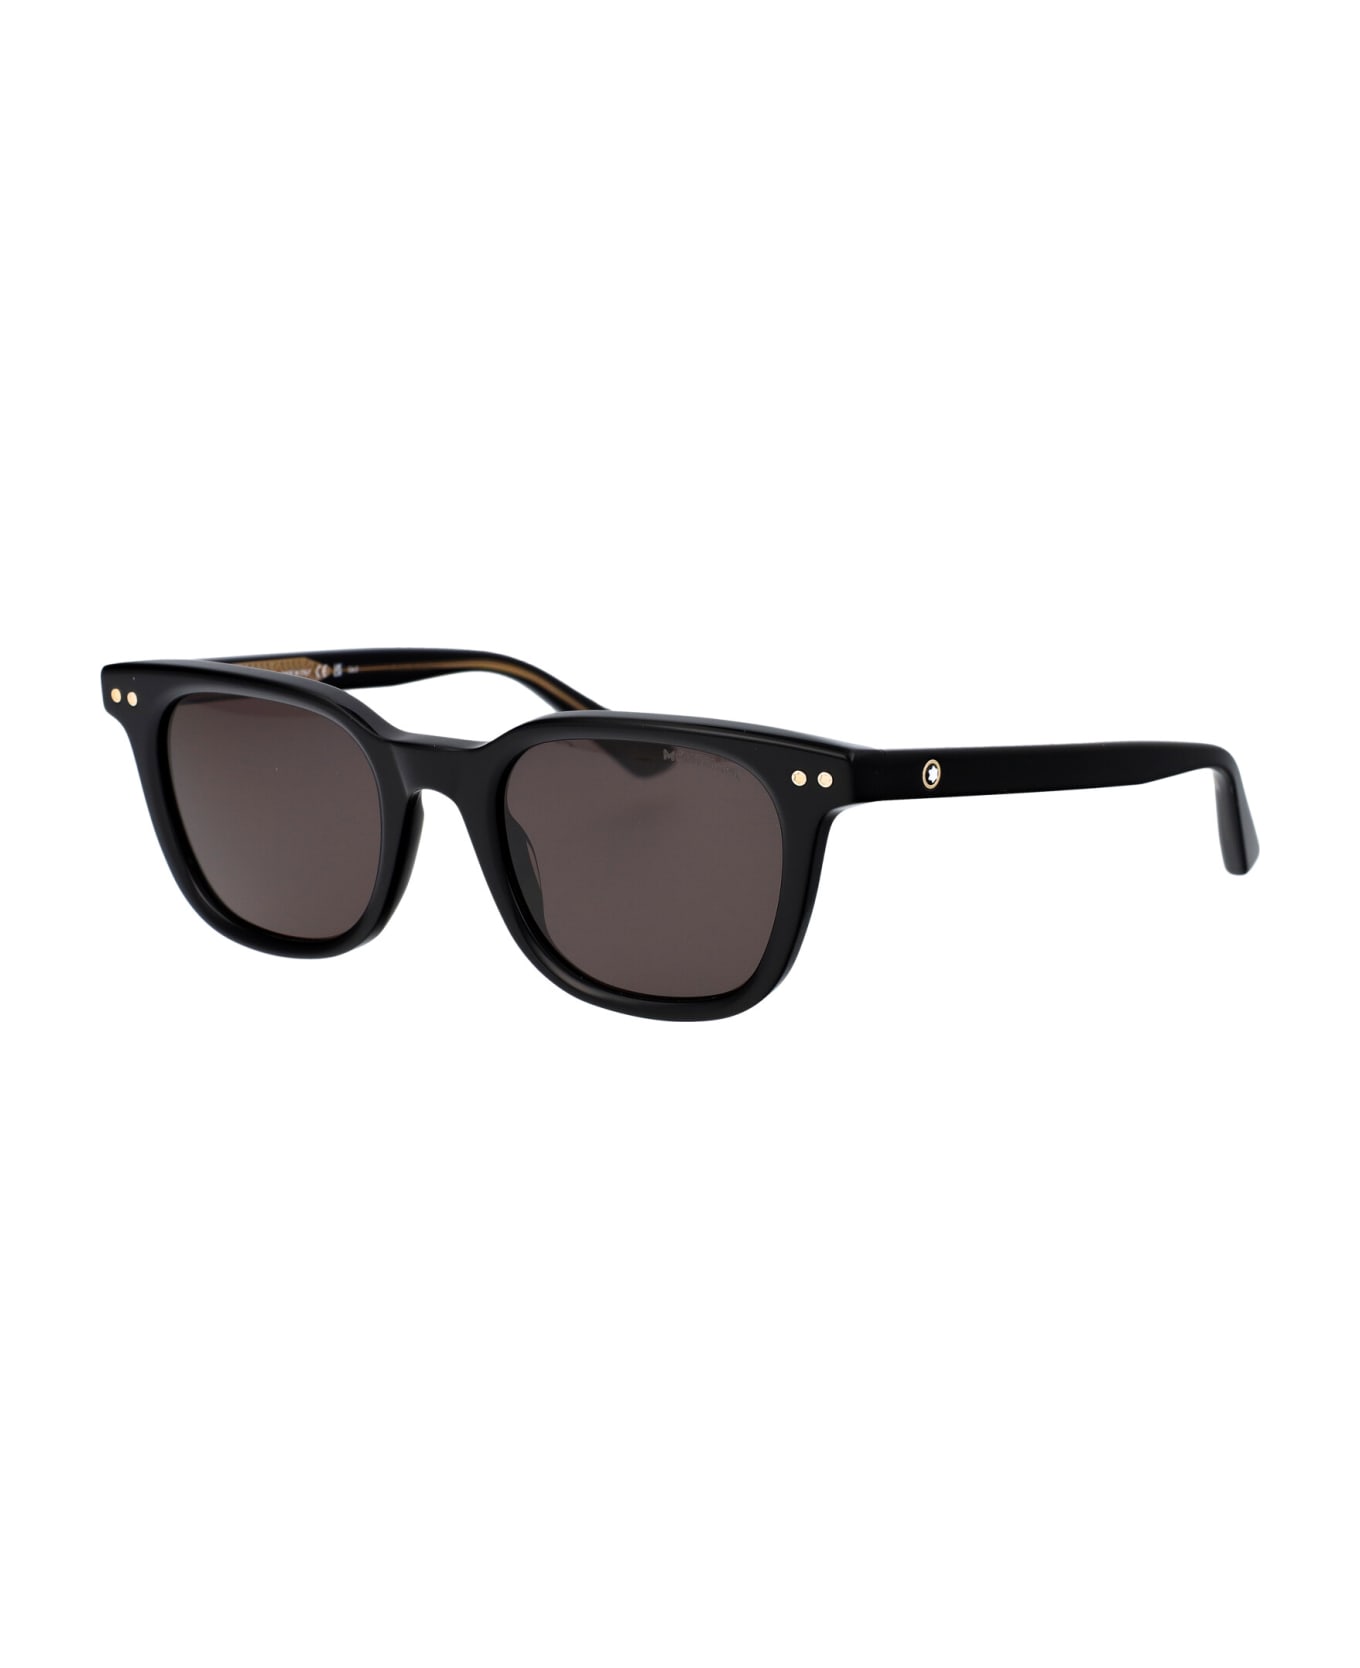 Montblanc Mb0320s Sunglasses - 001 BLACK BLACK GREY